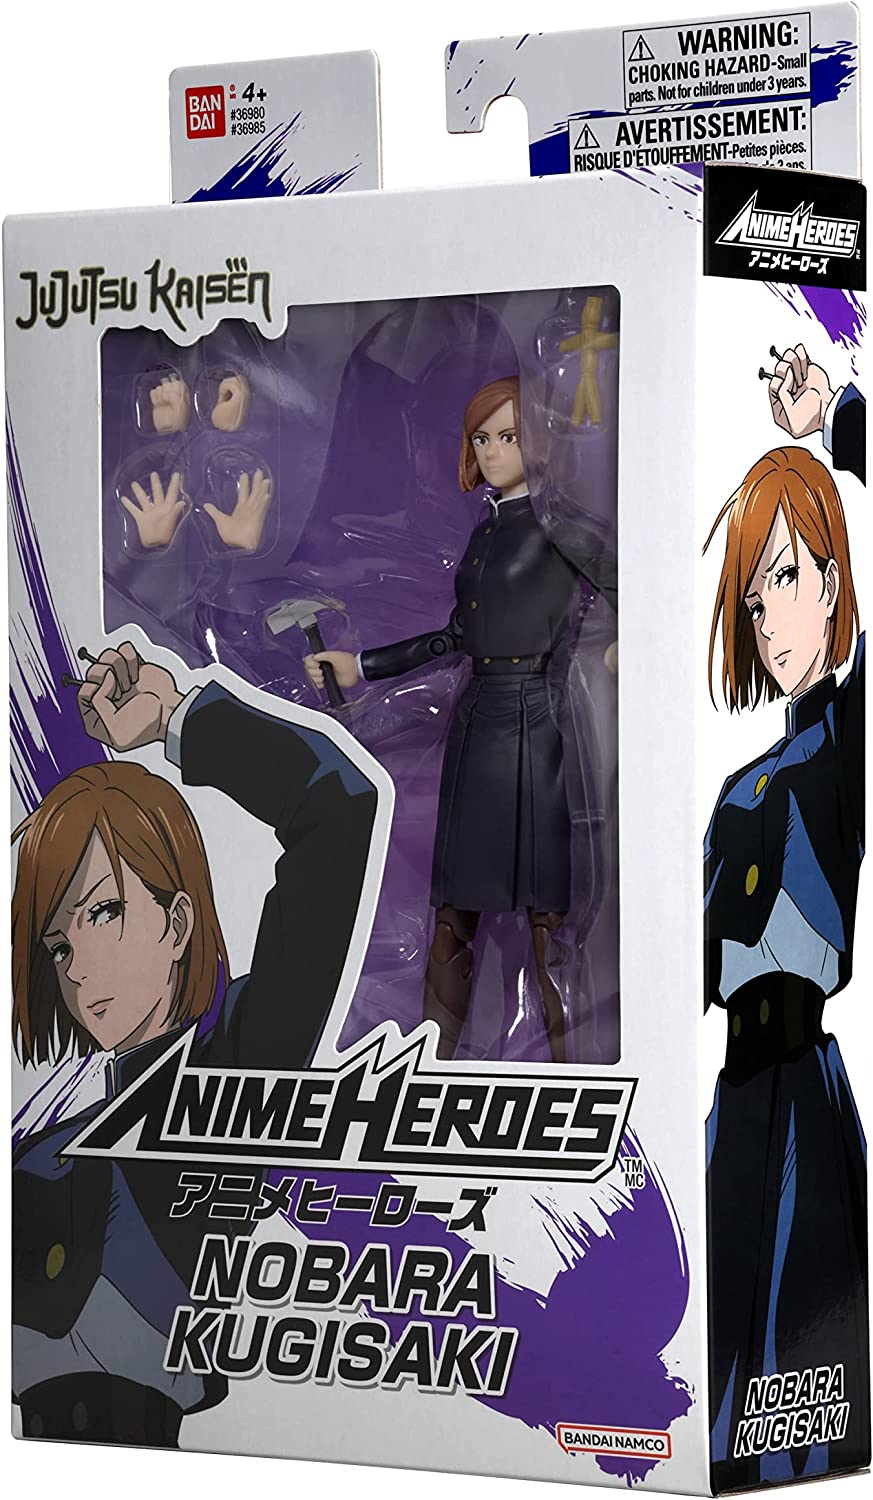 Bandai Anime Heroes Jujutsu Kaisen Figure 16cm - Nobara Kugisaki